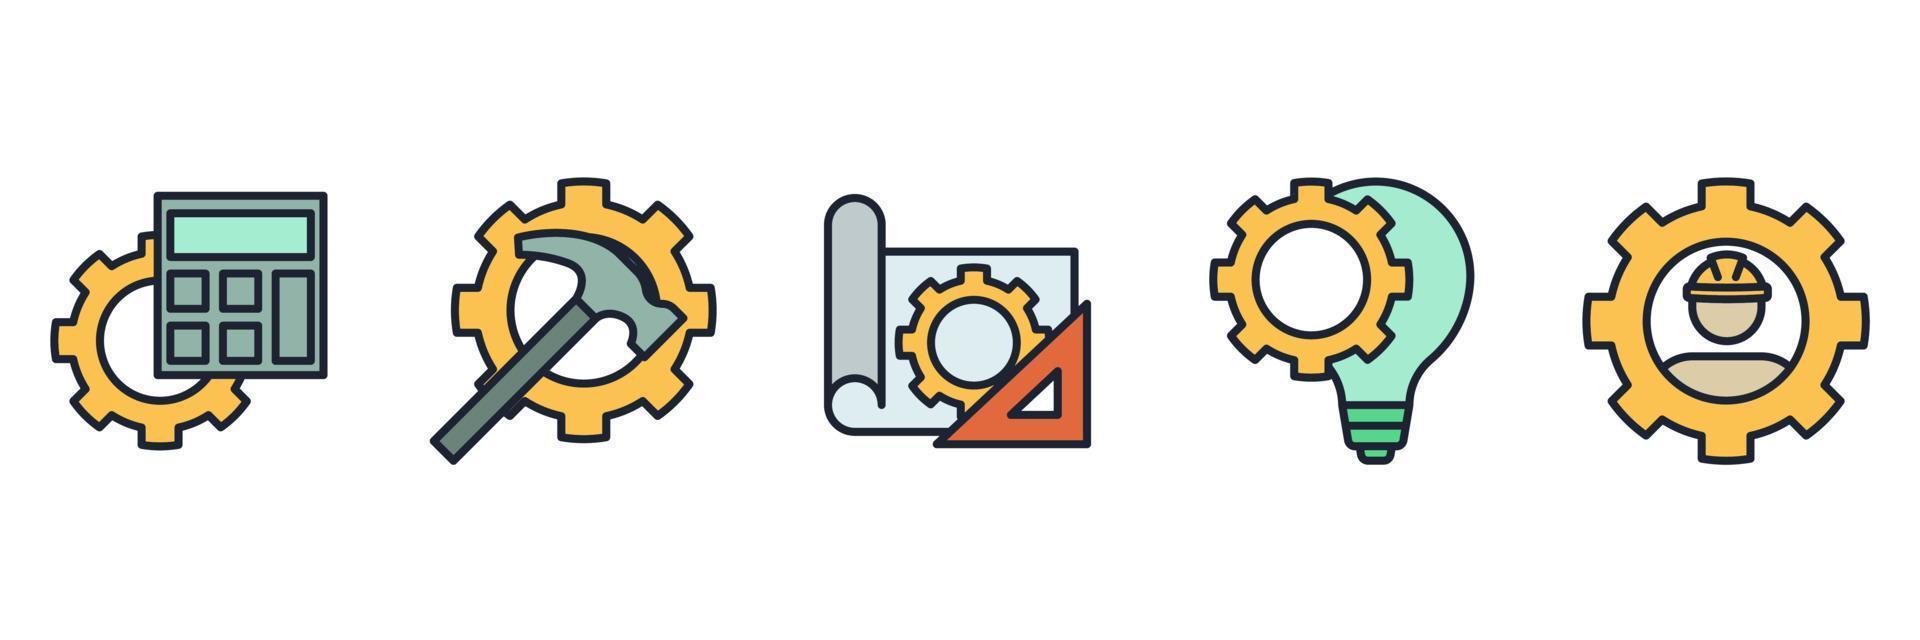 Engineering-Set-Symbol-Symbolvorlage für Grafik- und Webdesign-Sammlung Logo-Vektor-Illustration vektor